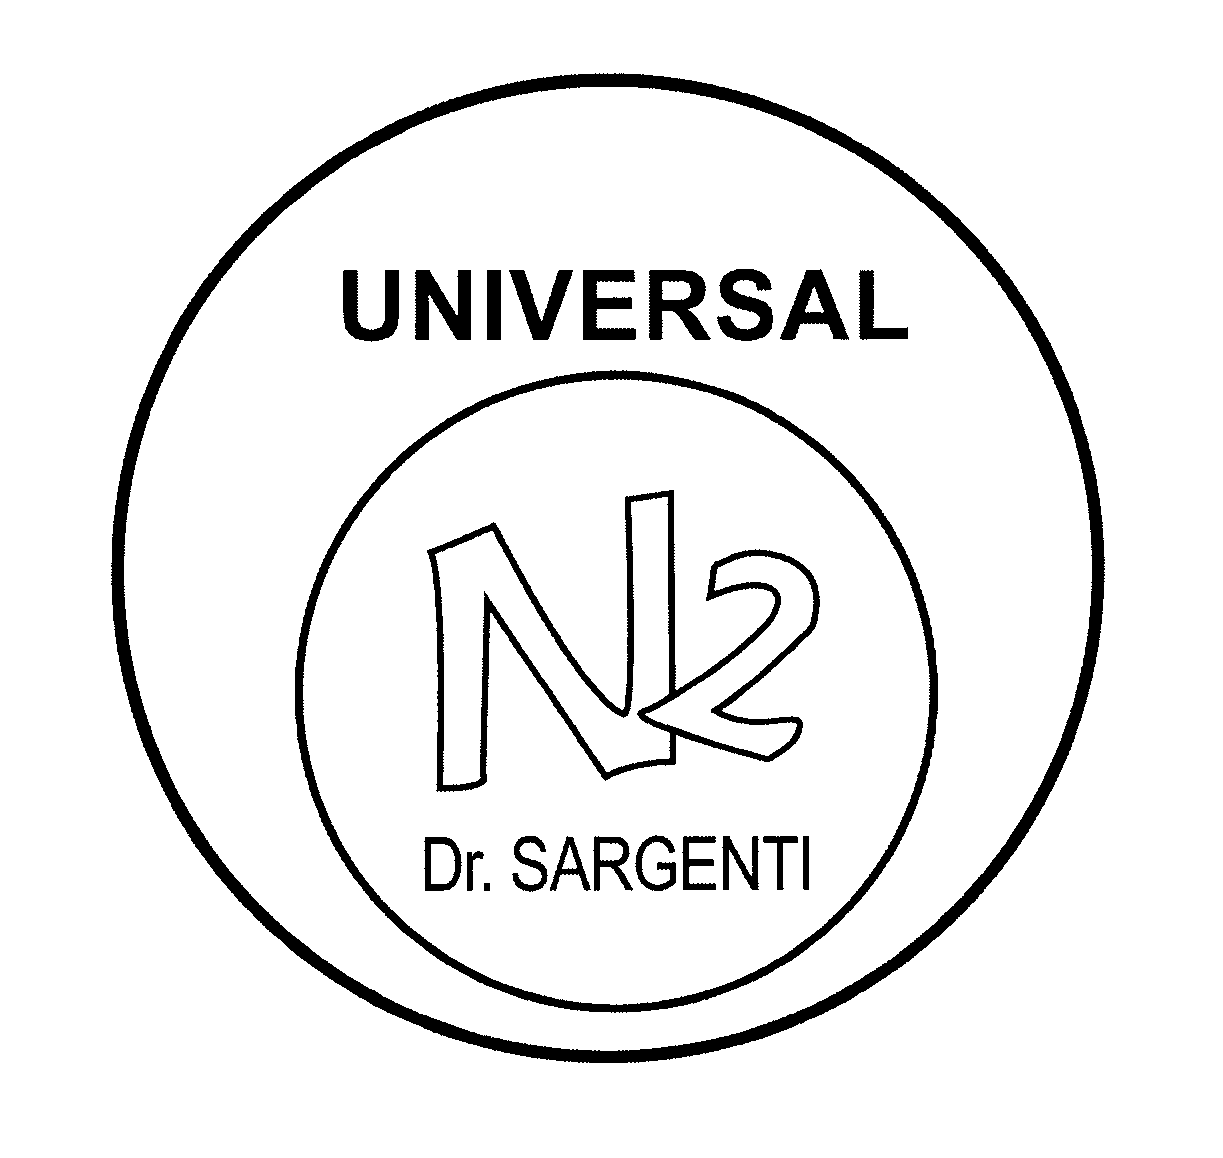  N2 UNIVERSAL DR. SARGENTI